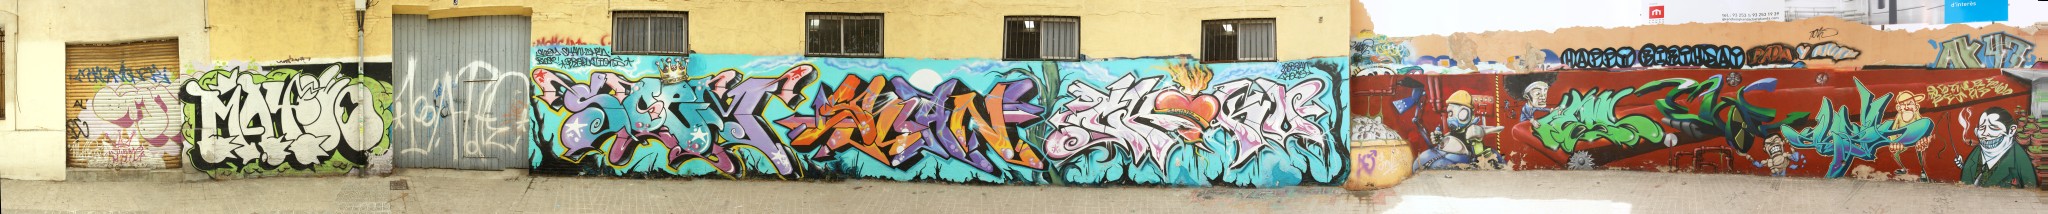 pan11 linear graffiti wall a